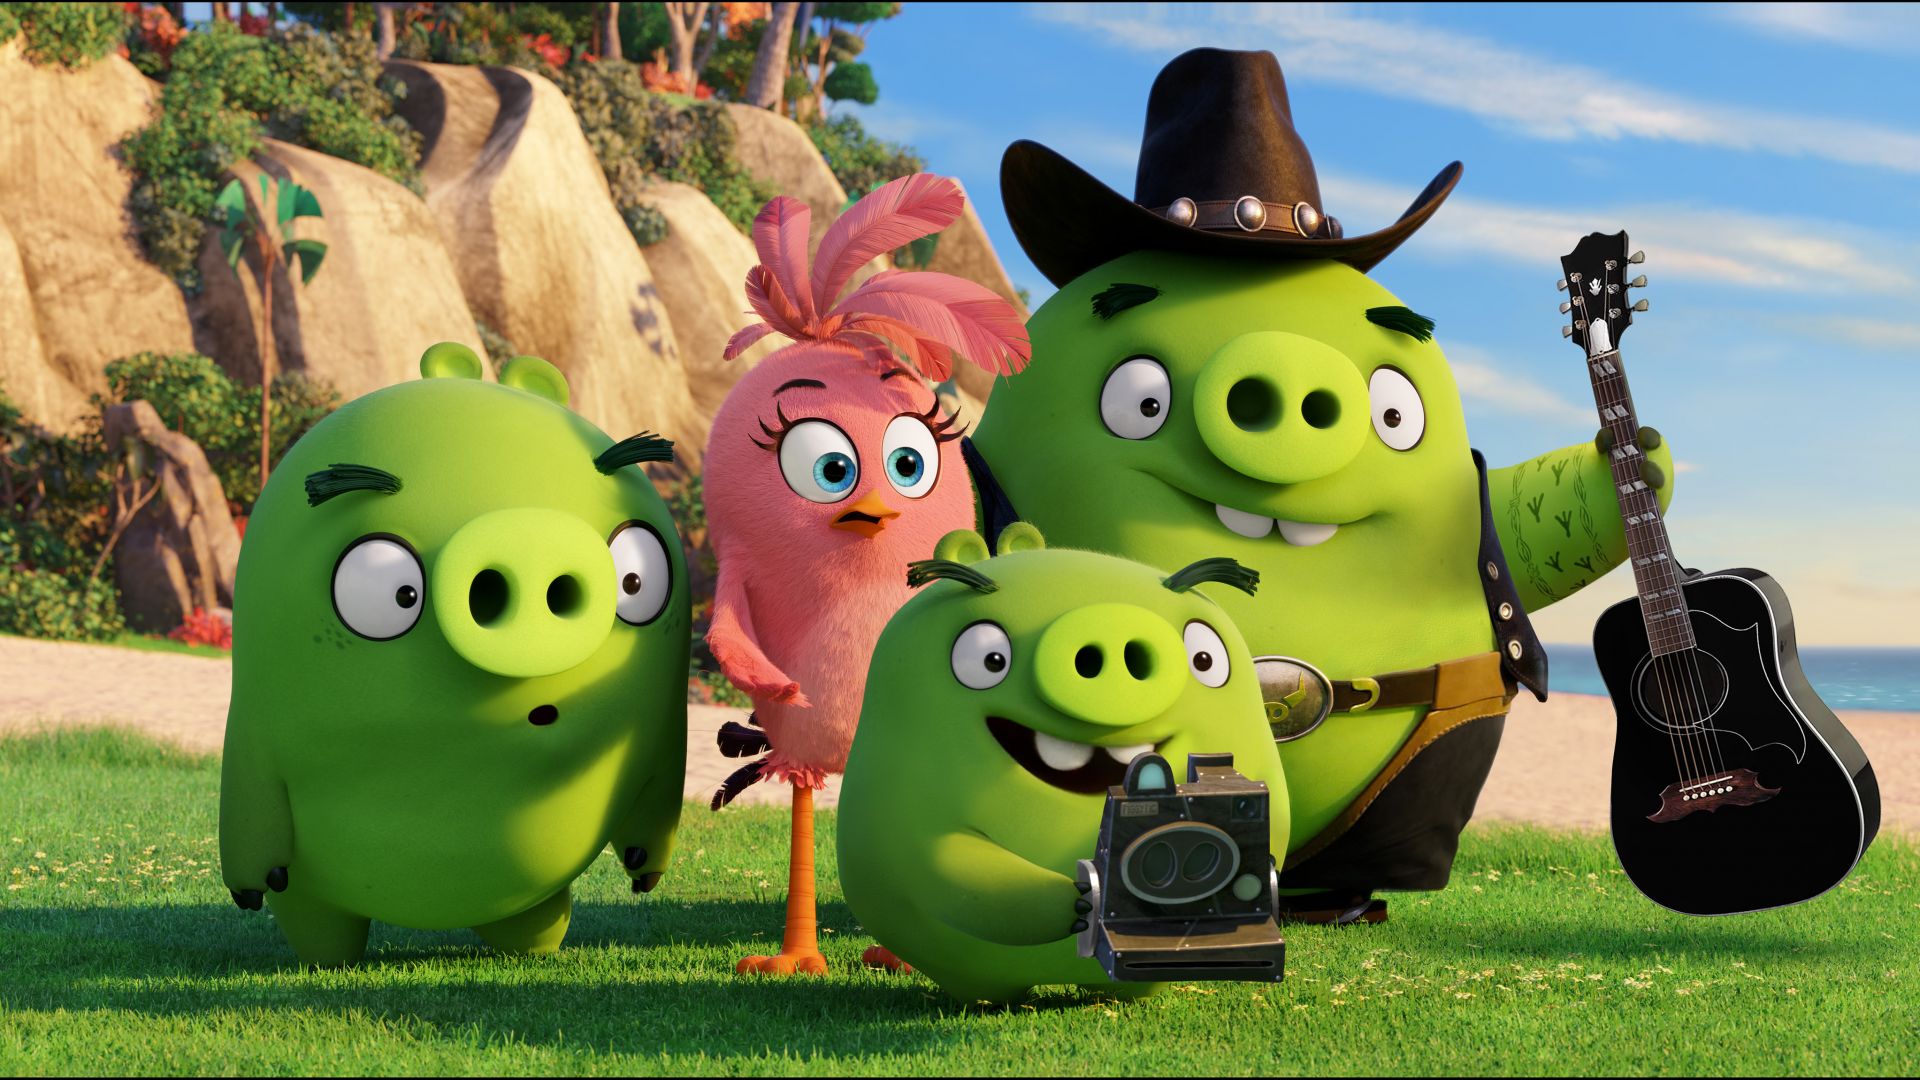 Angry Birds, Green pigs, family, Animation 2016 (horizontal)